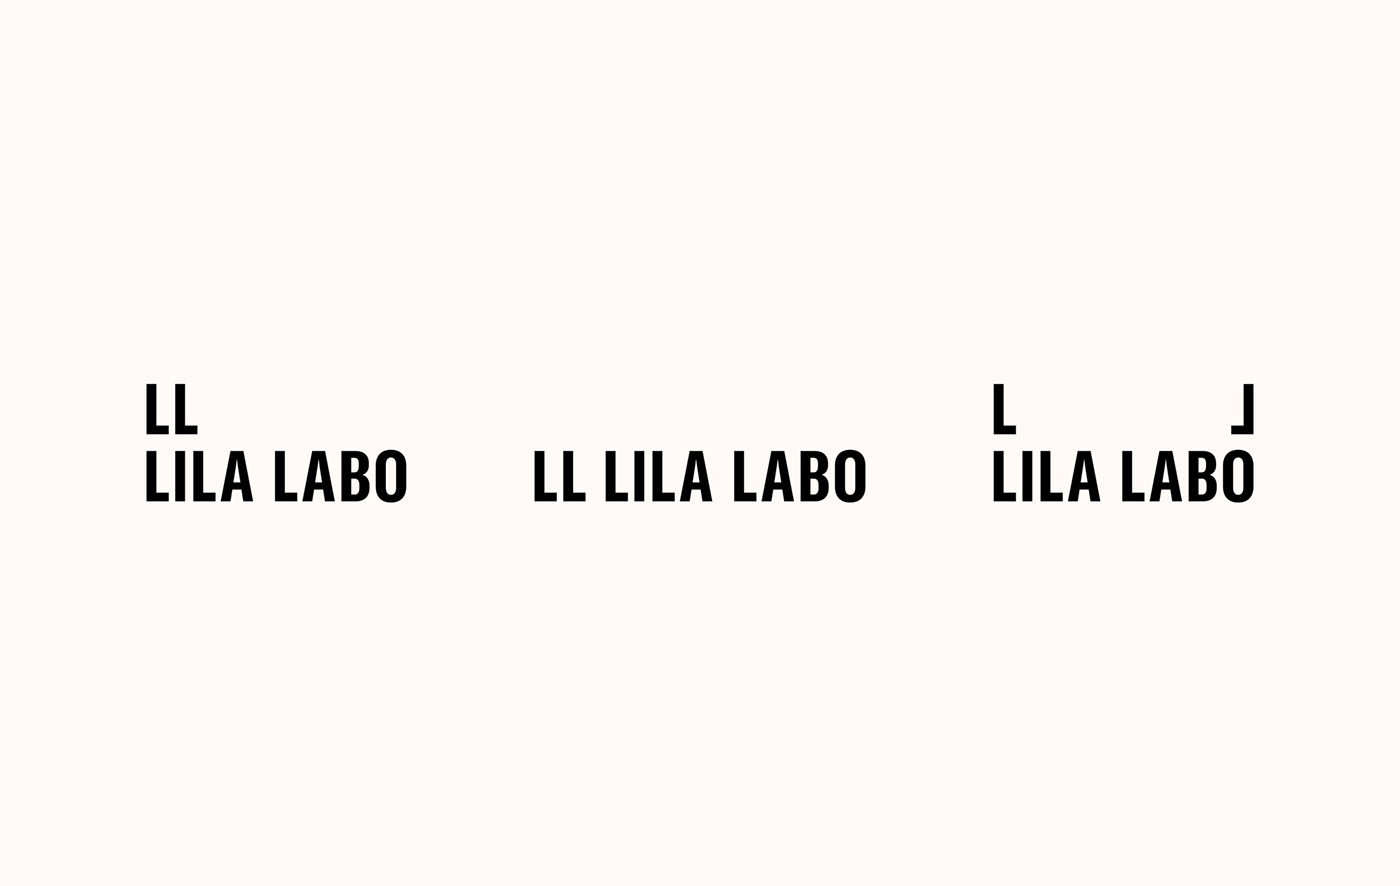 Lila Labo极简优雅的品牌设计